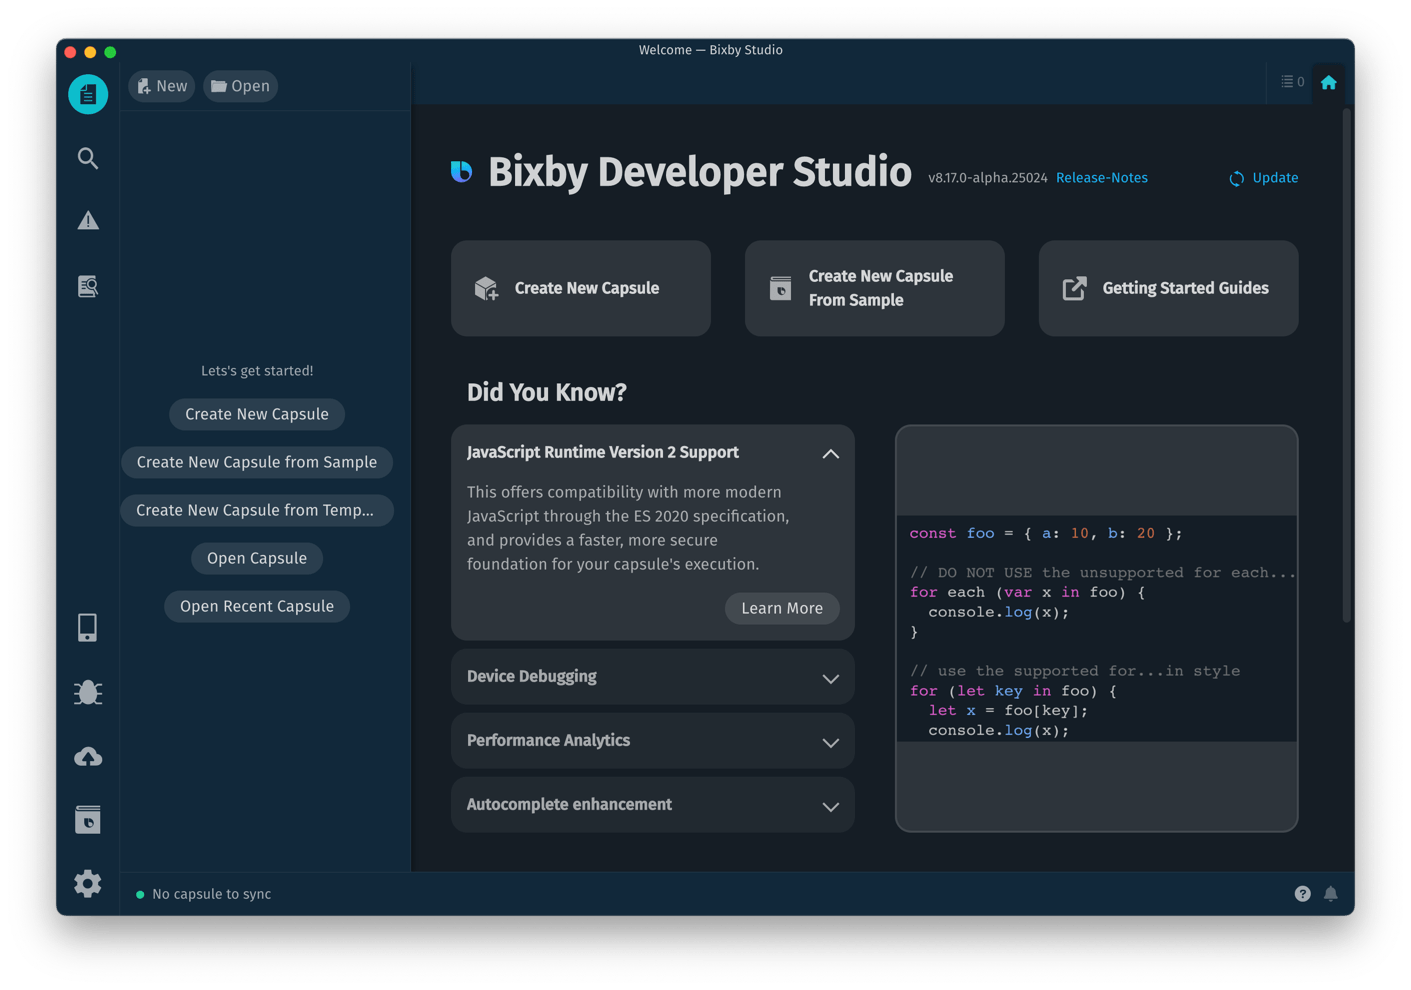 Bixby Developer Studio welcome screen